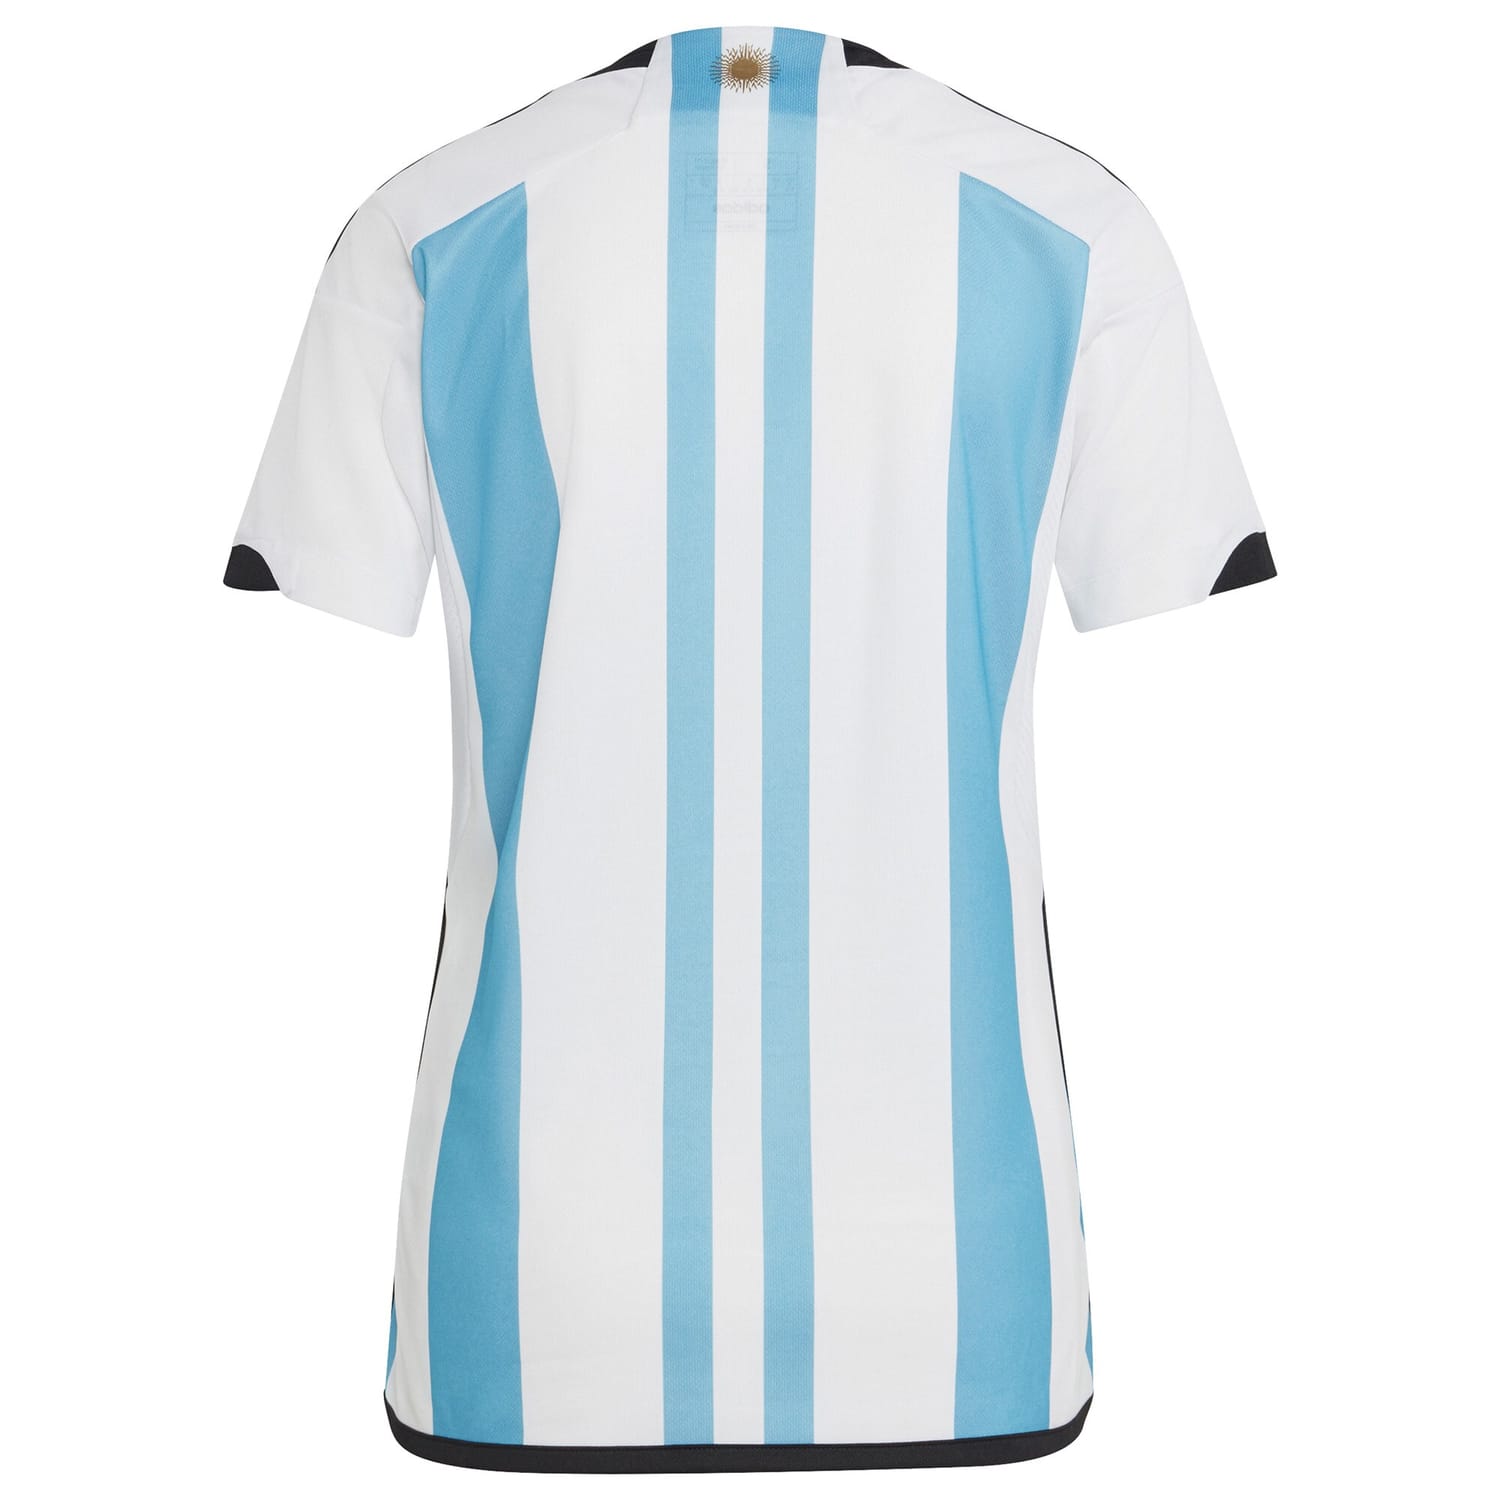 Champions Argentina National Team Home Winners Jersey Shirt White/Light Blue 2022 for Women